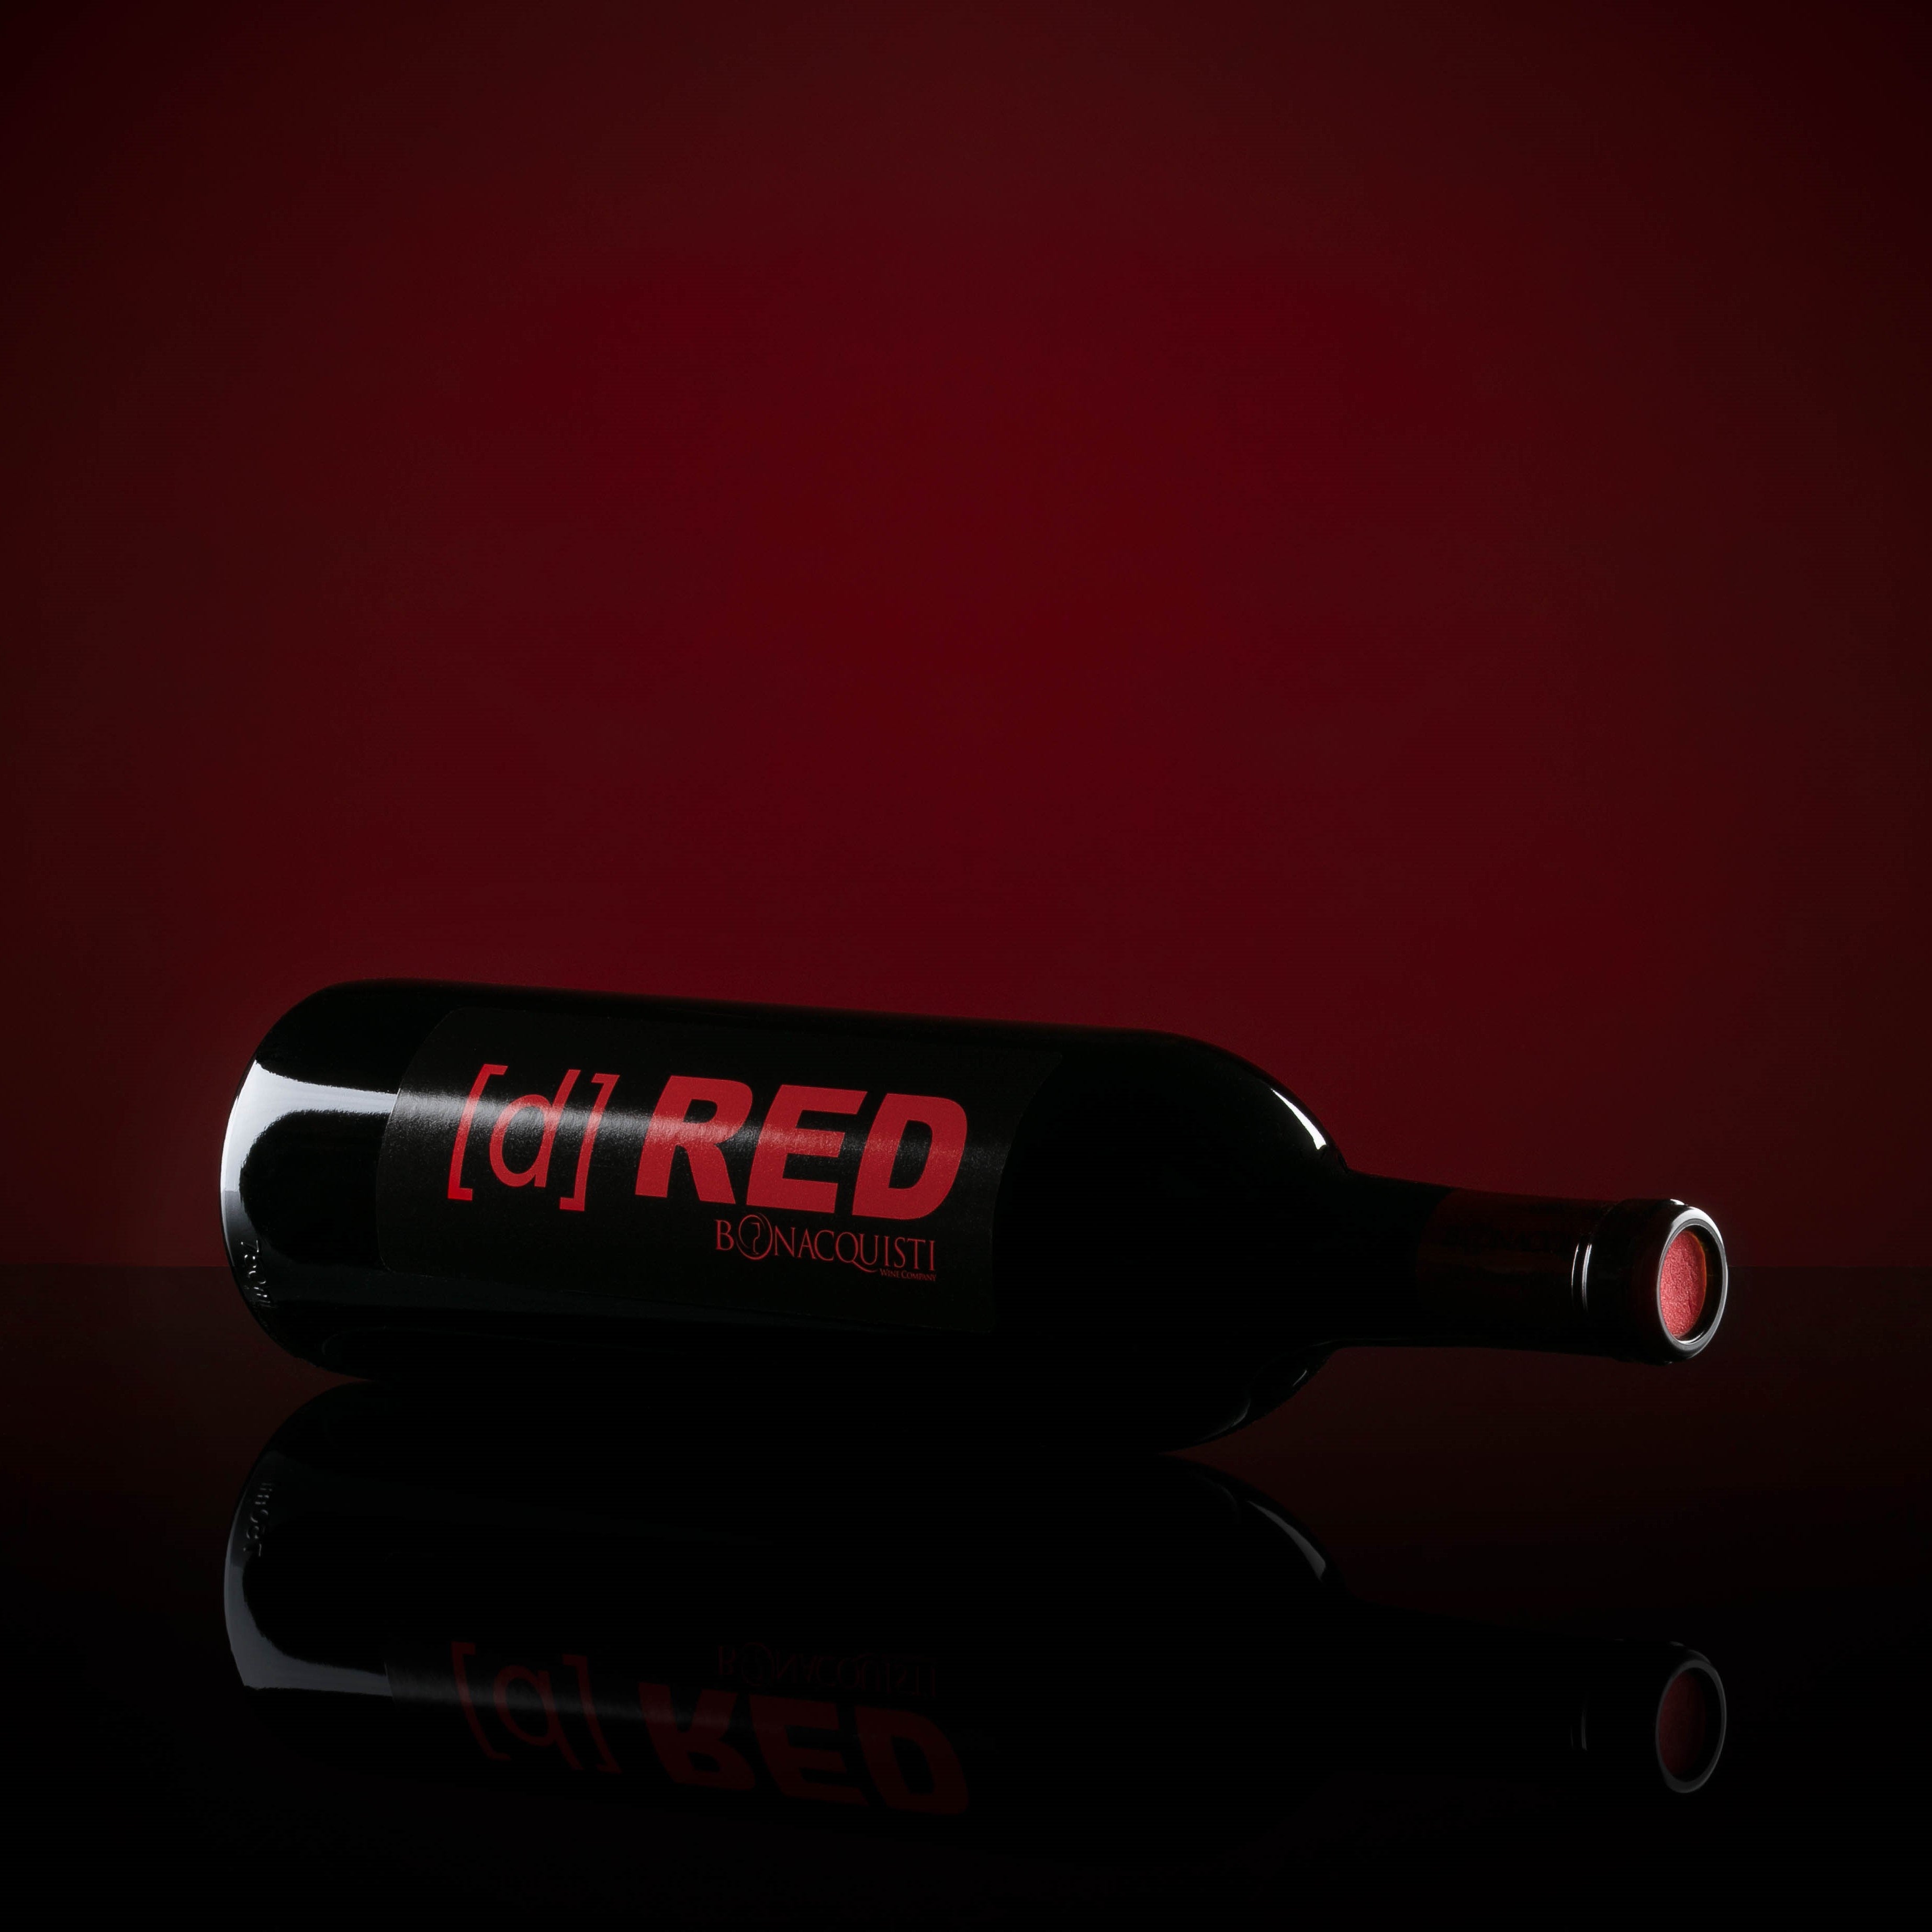 eftertænksom G Philadelphia d] Red – Bonacquisti Wine Company